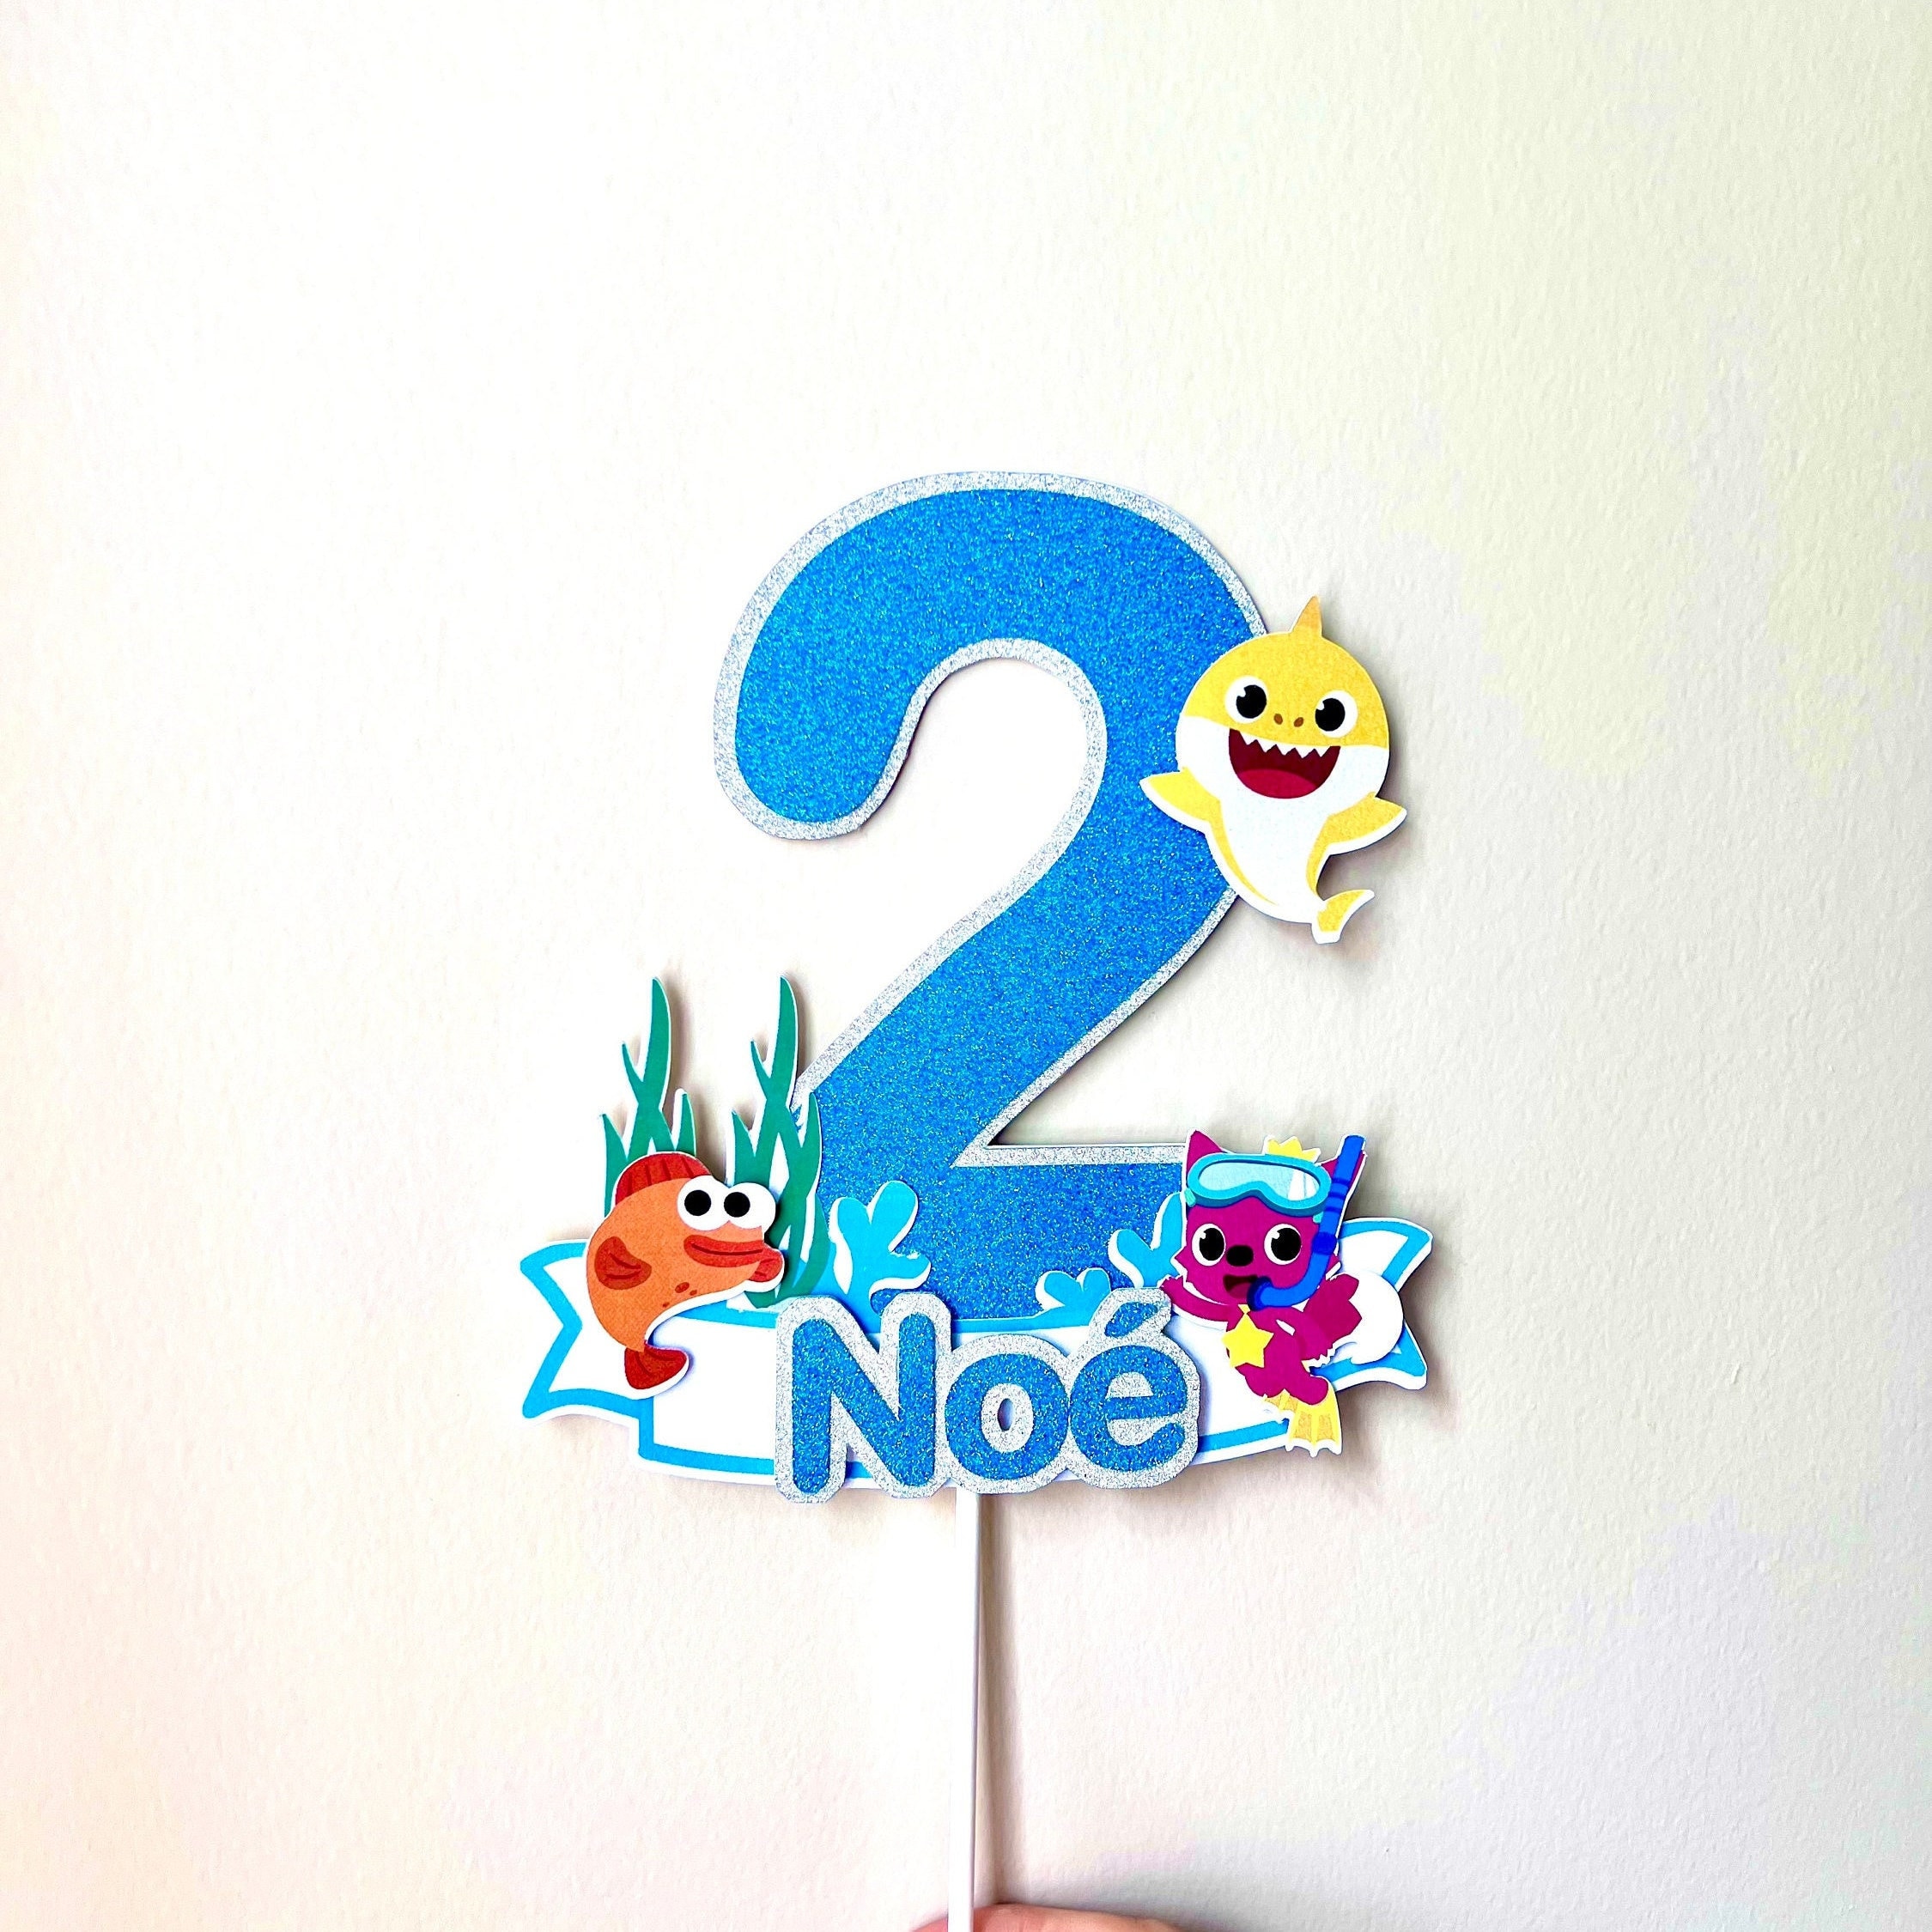 Baby Shark Cake Topper Children’s Birthday Decoration Personalised BLUE